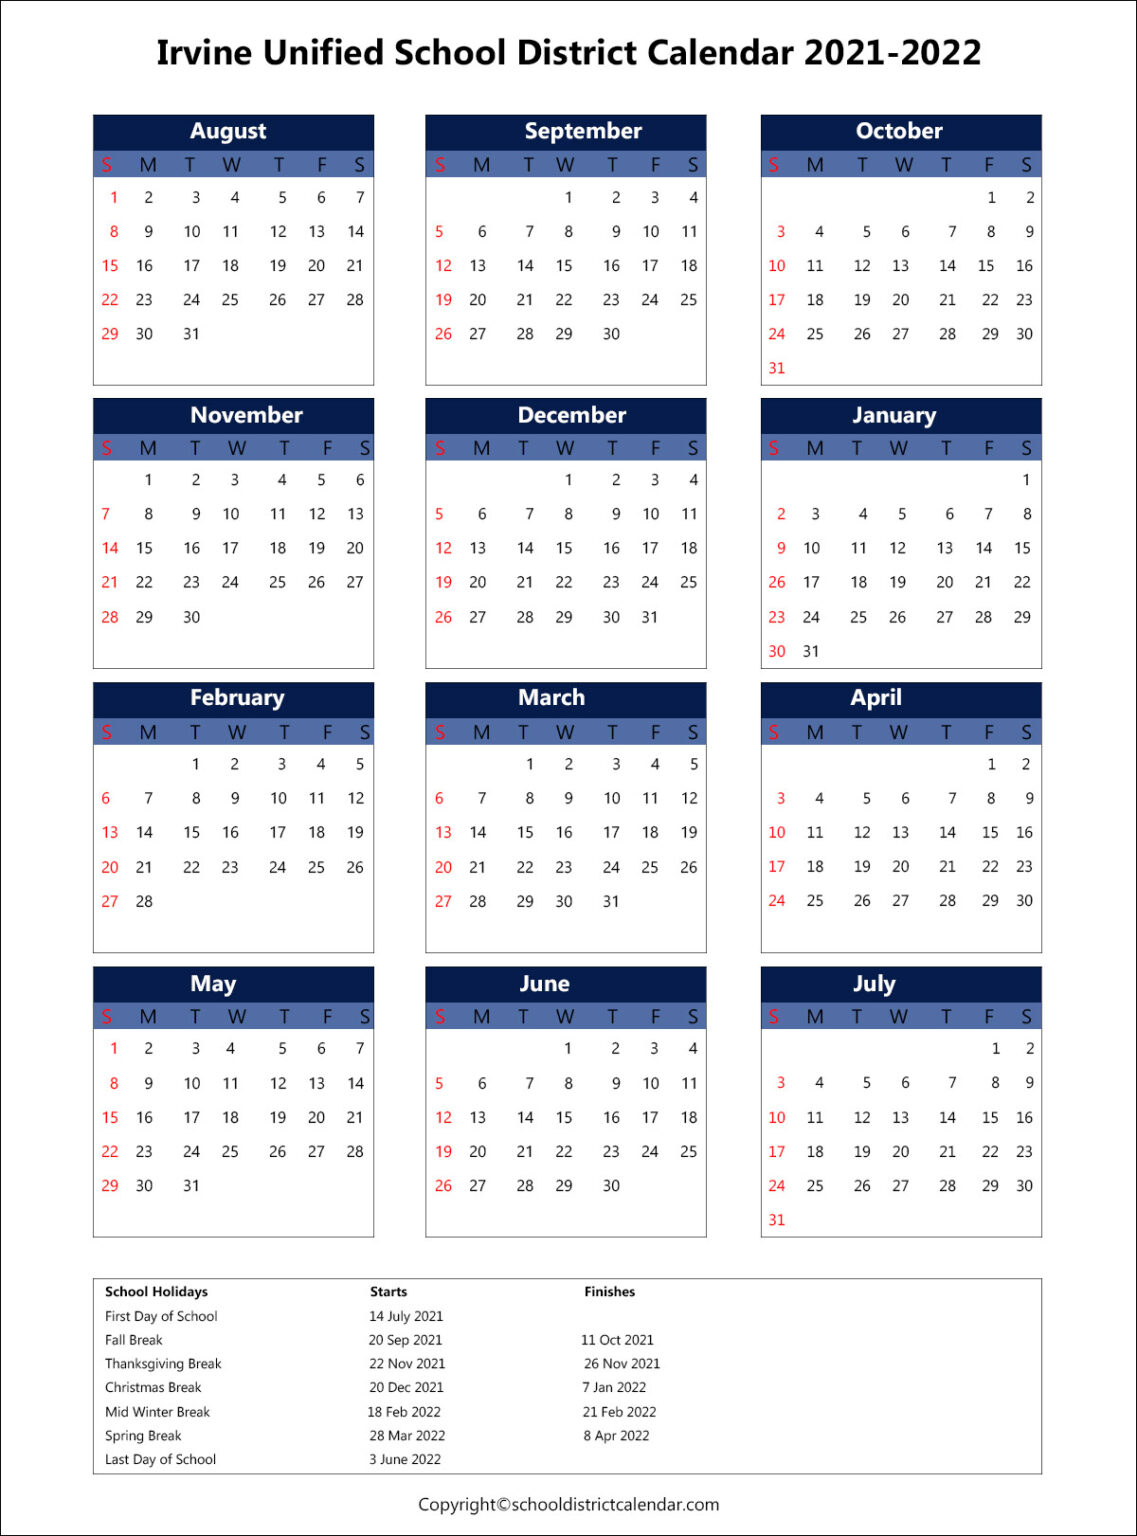 Irvine Unified School District Calendar Holidays 20212022